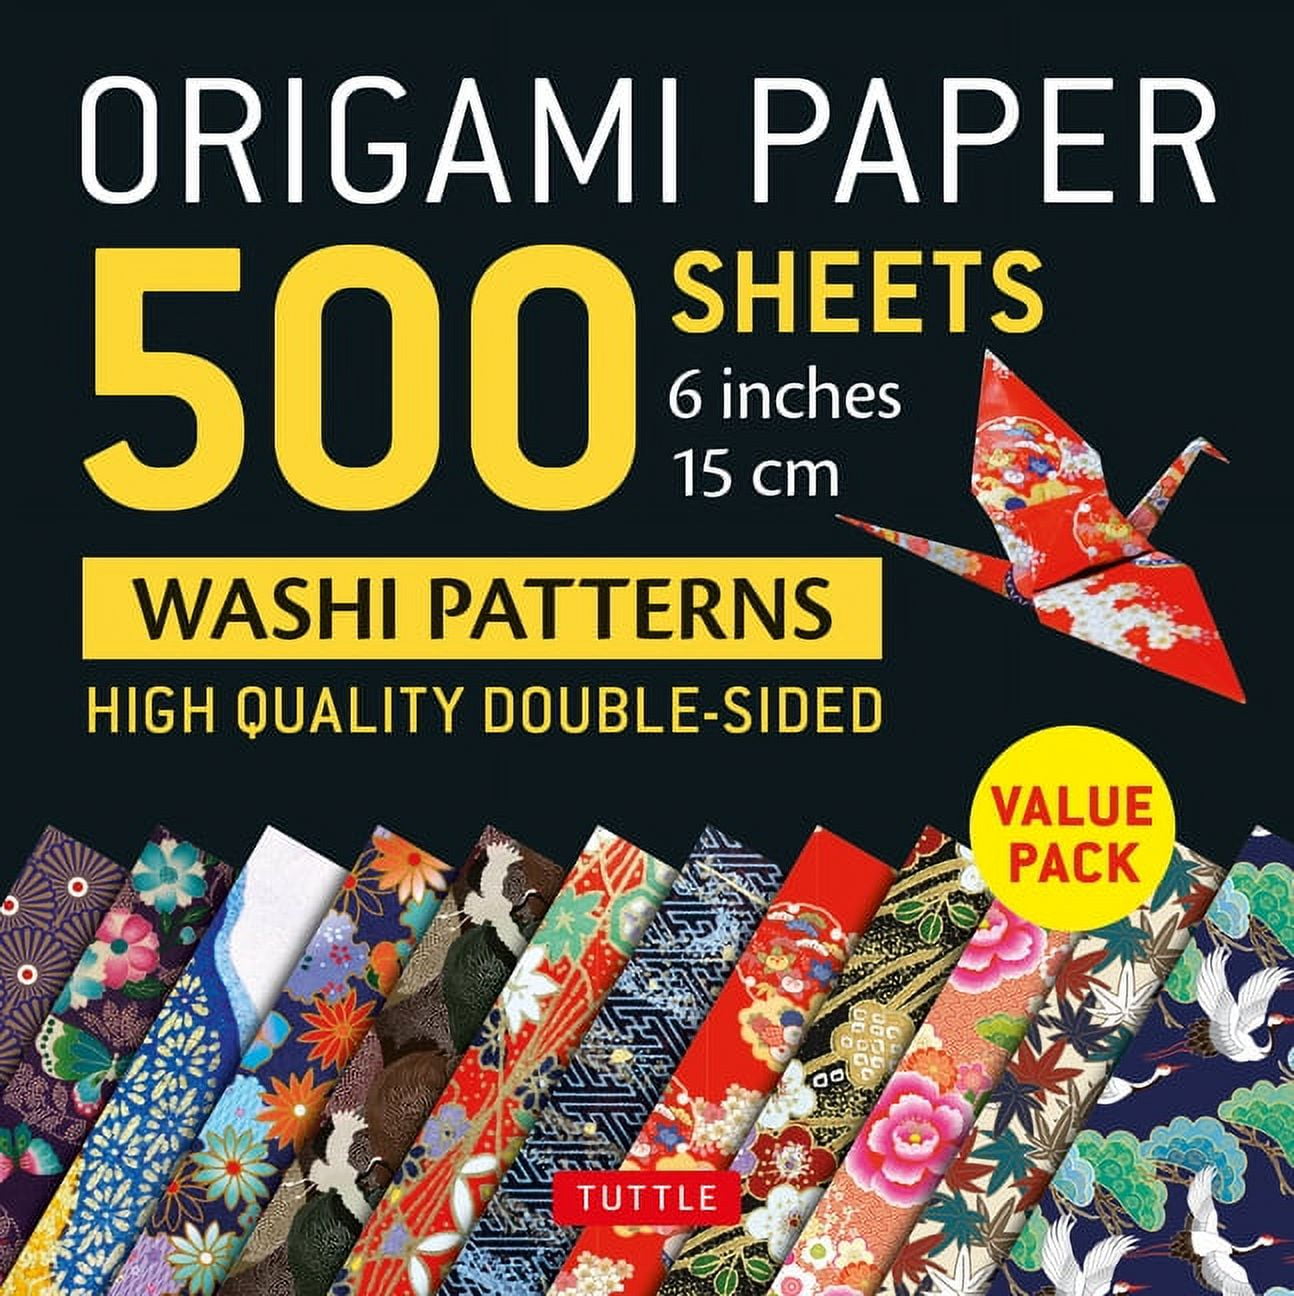 Cat Origami (Origami Books) (Mixed media product)